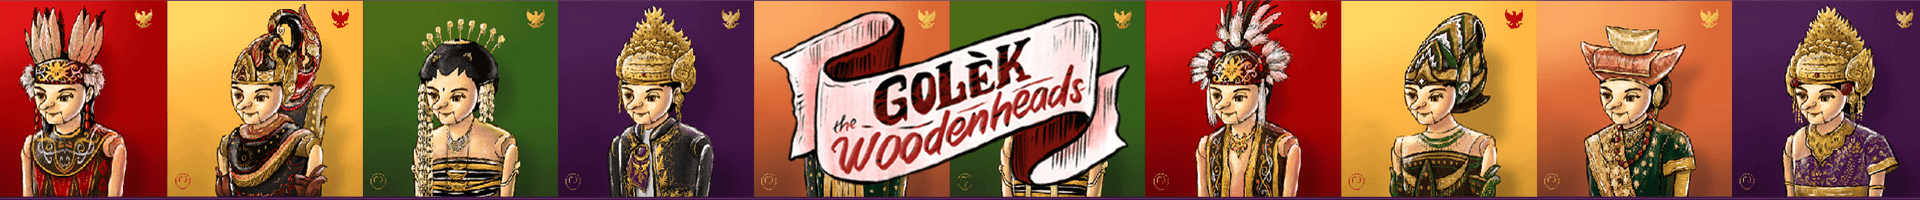 Genesis Golek the Woodenheads